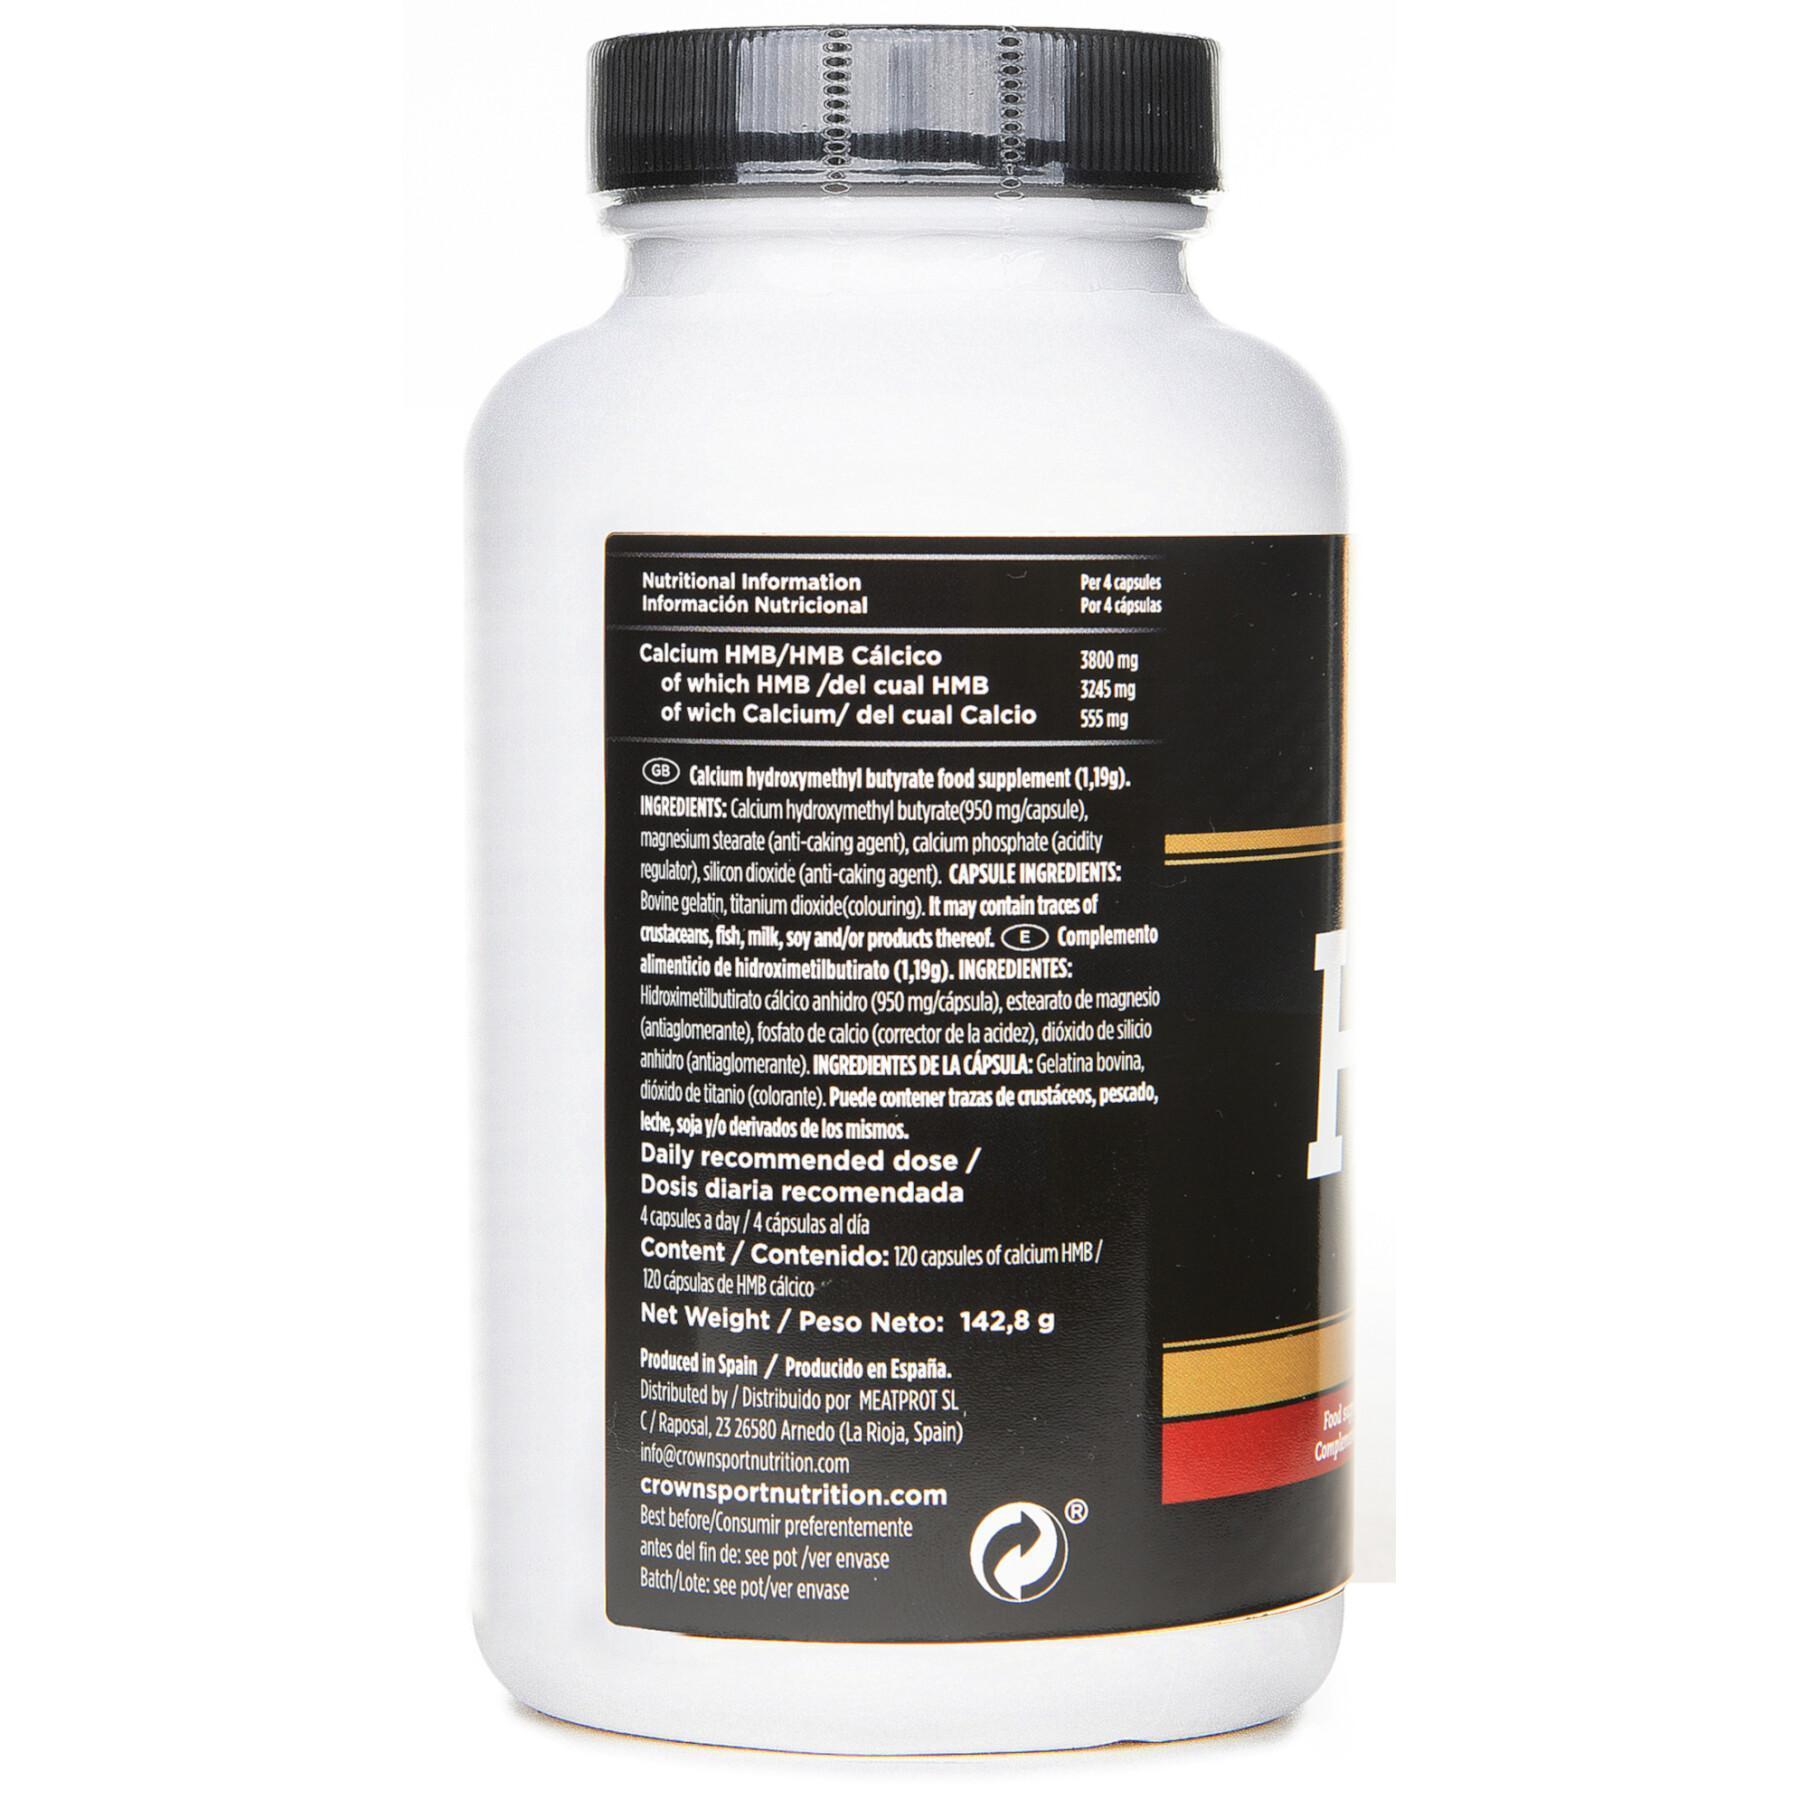 Energidryck Crown Sport Nutrition Isodrink & Energy informed sport - citron - 640 g